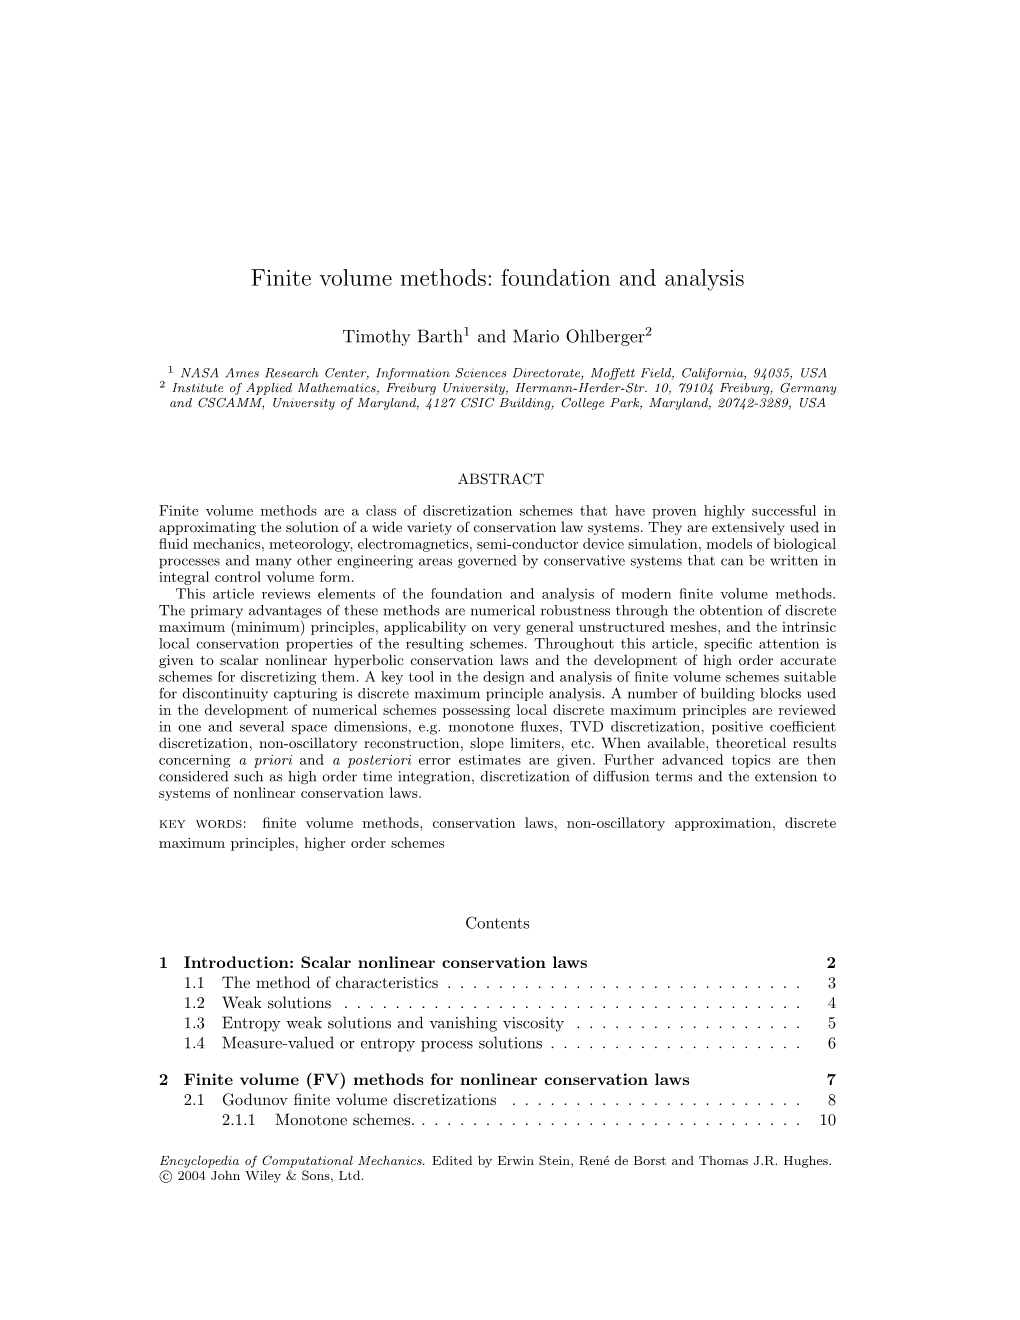 Finite Volume Methods: Foundation and Analysis